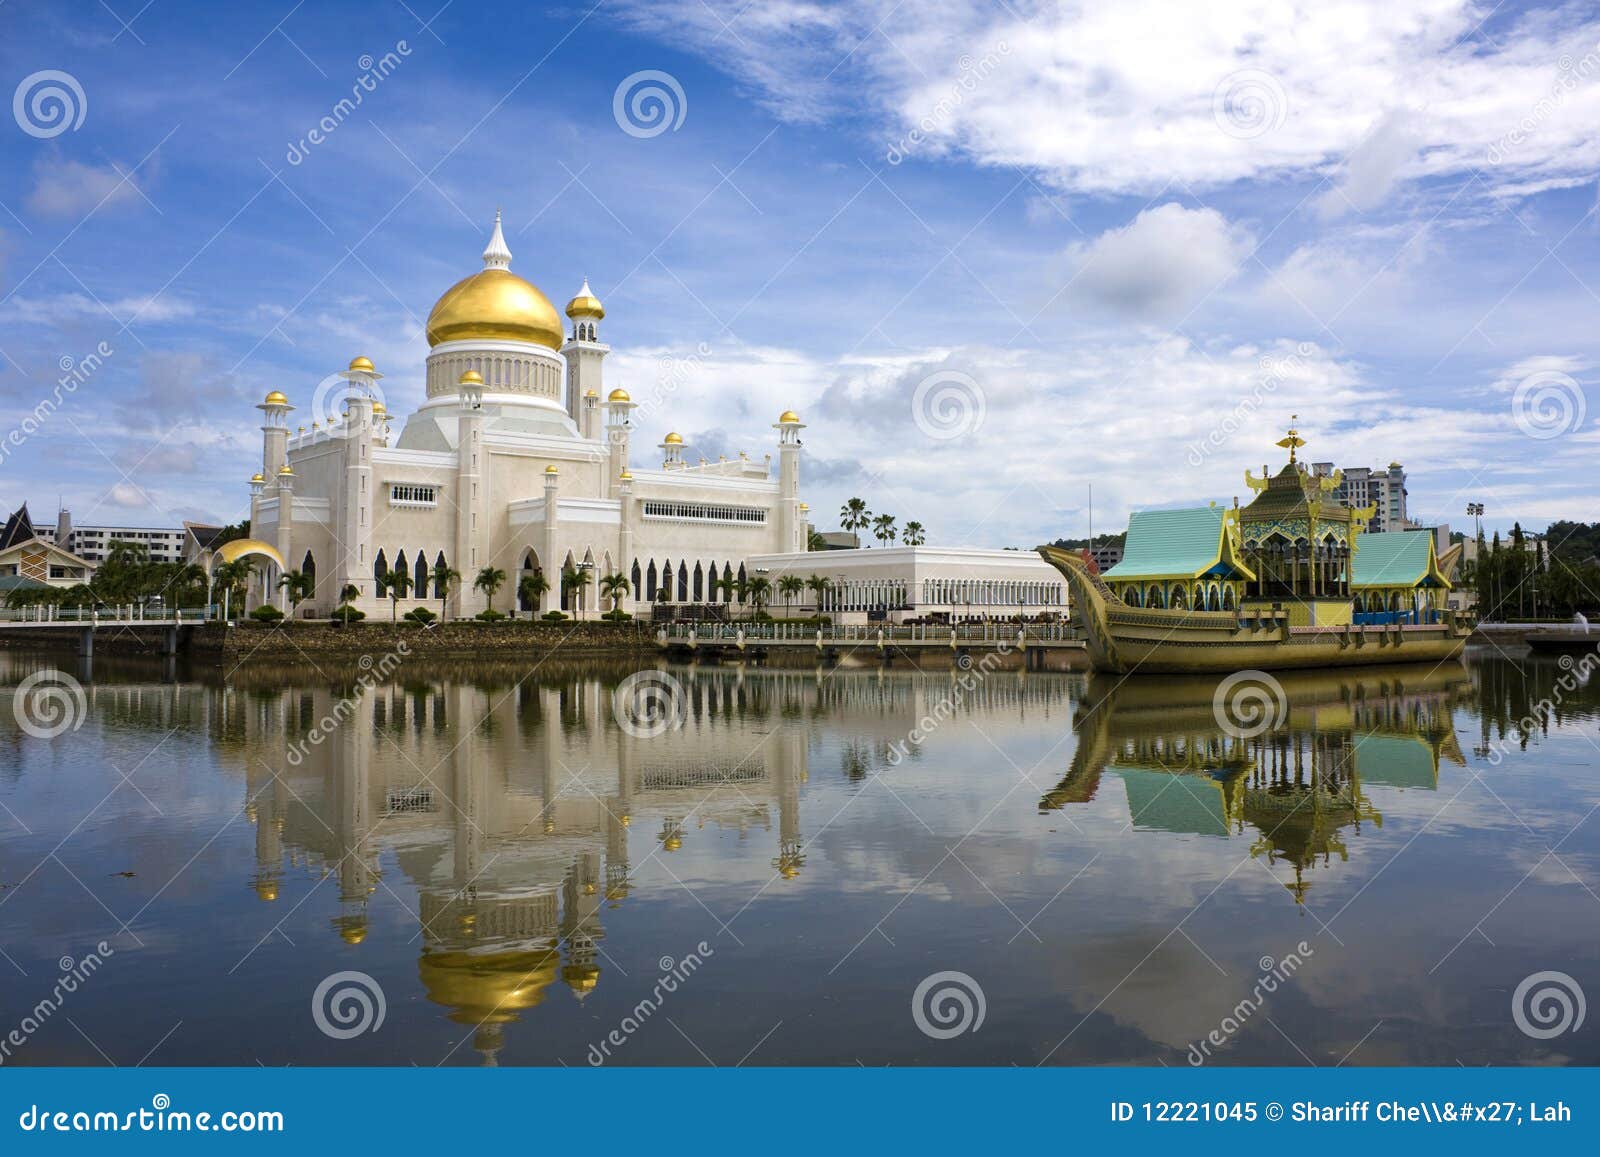 sultan omar ali saifuddien mosque, brunei